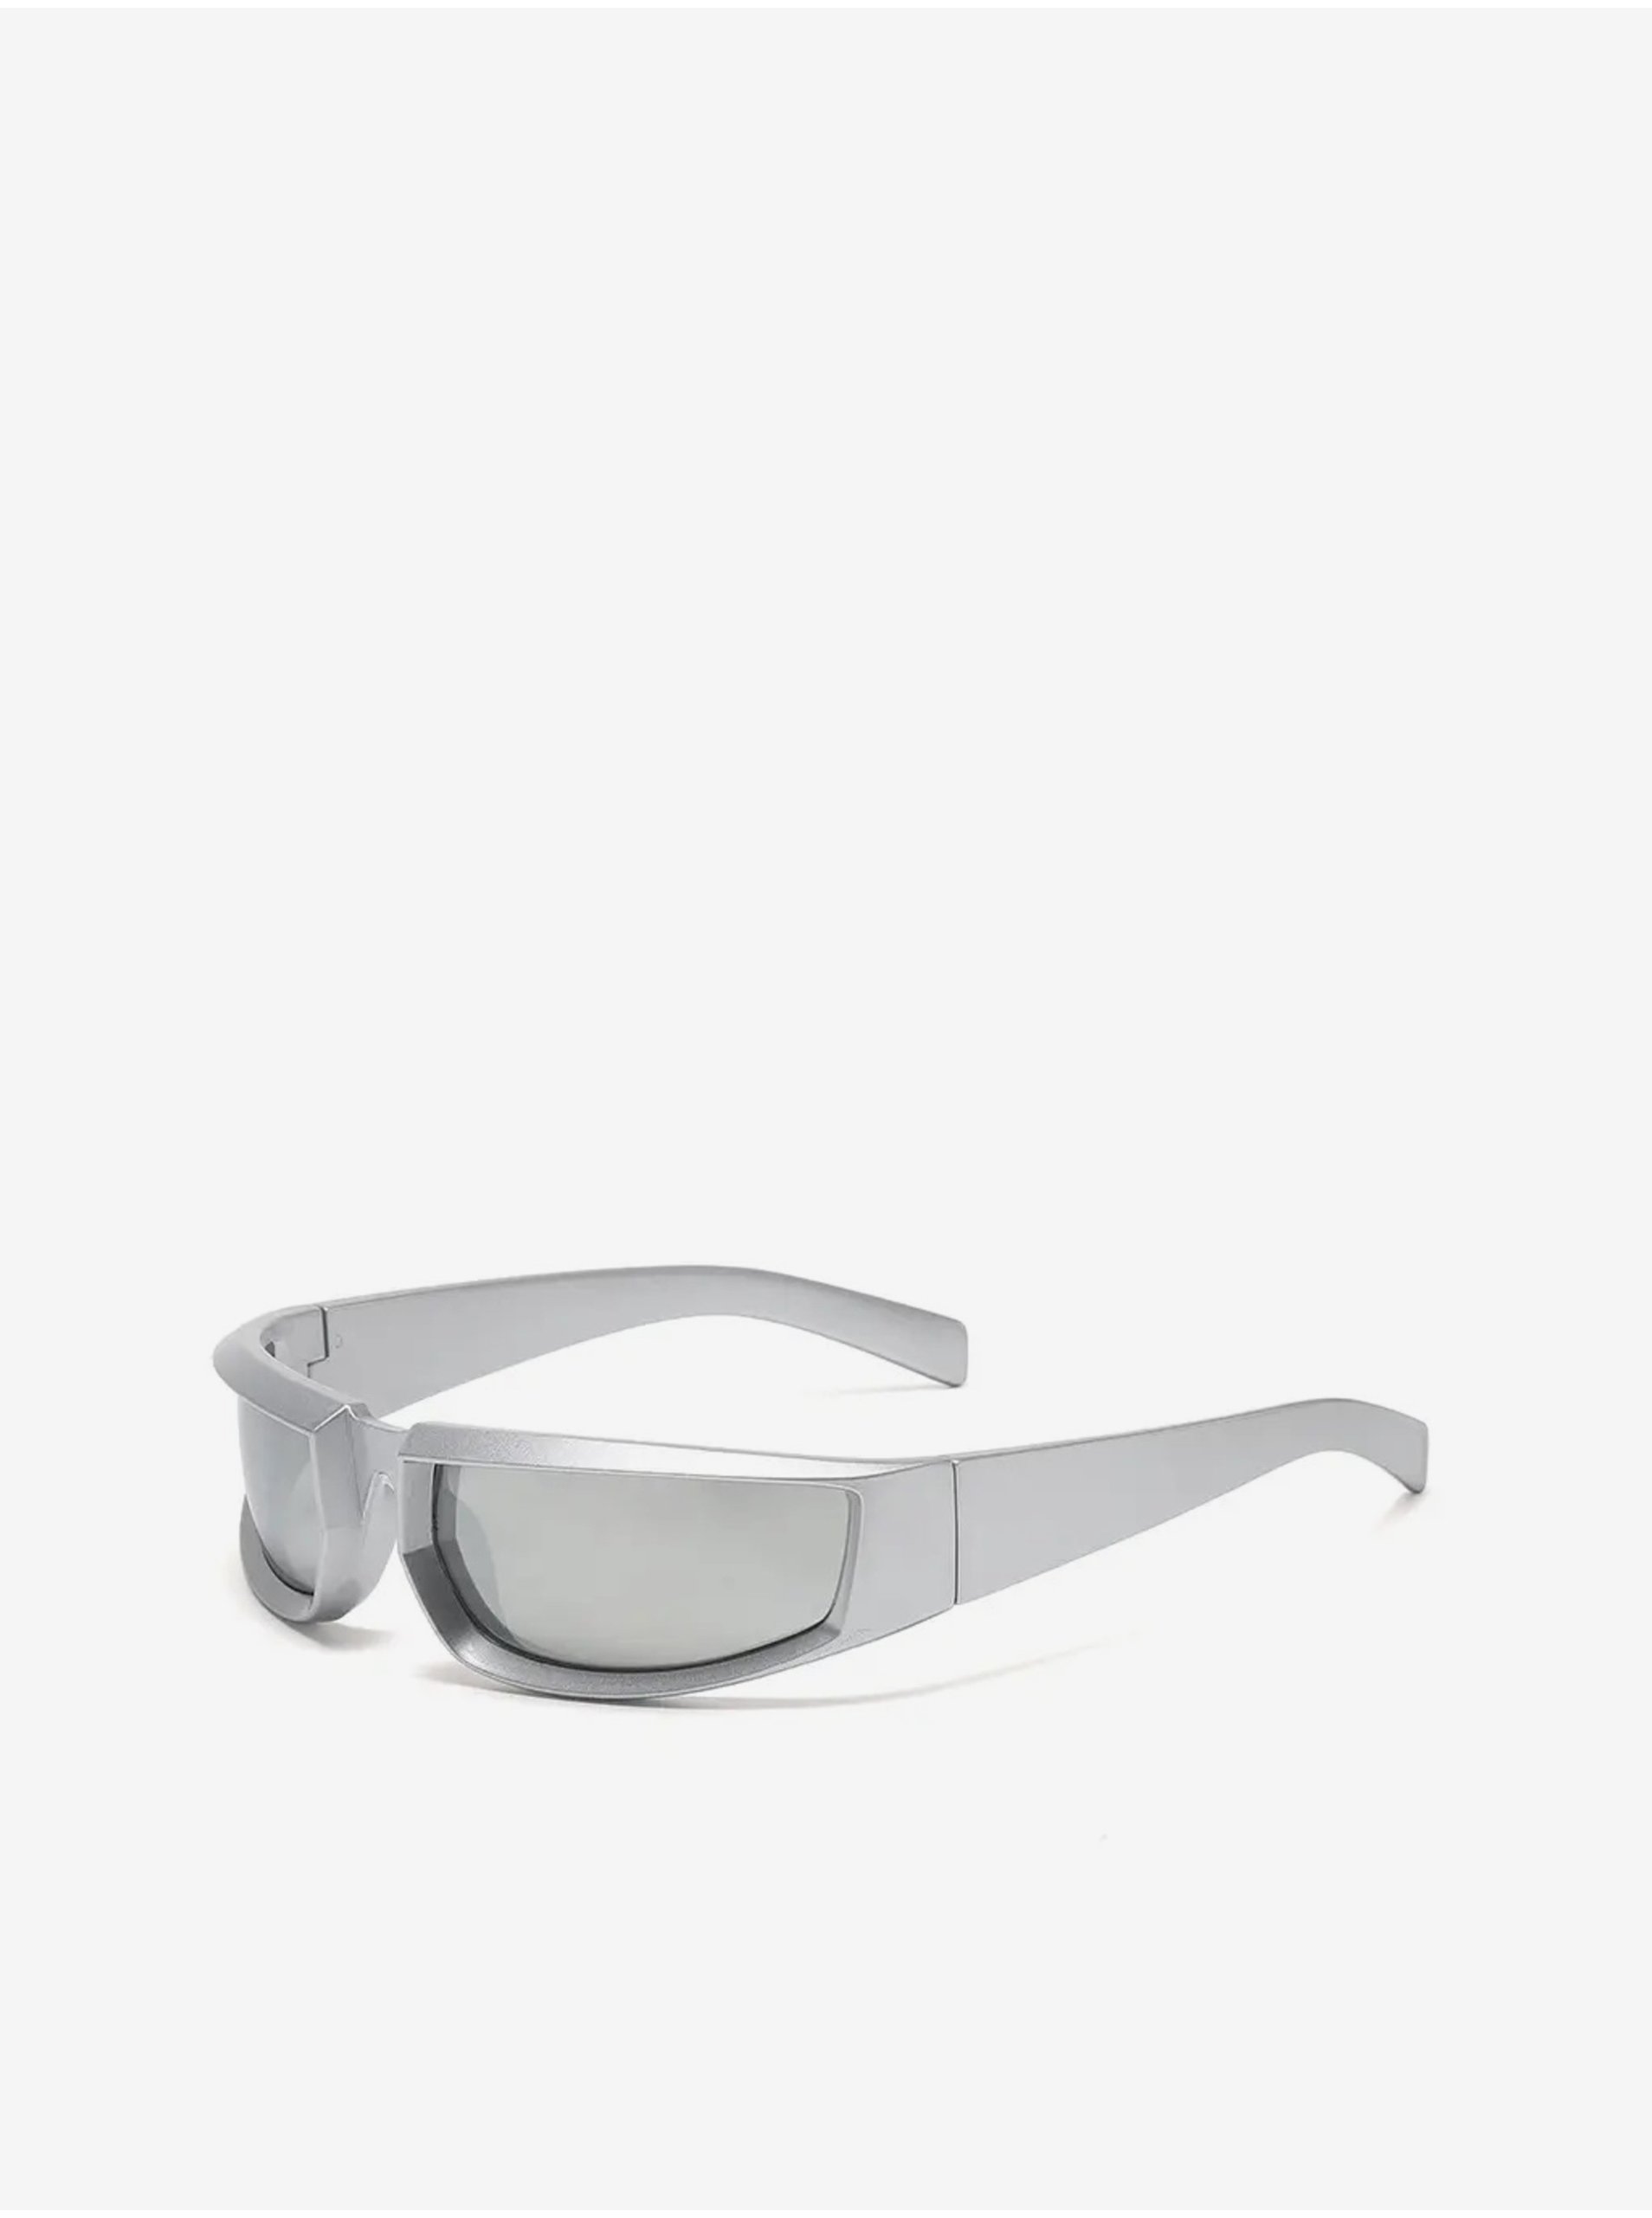 E-shop Biele unisex športové slnečné okuliare VeyRey Steampunk Istephiel